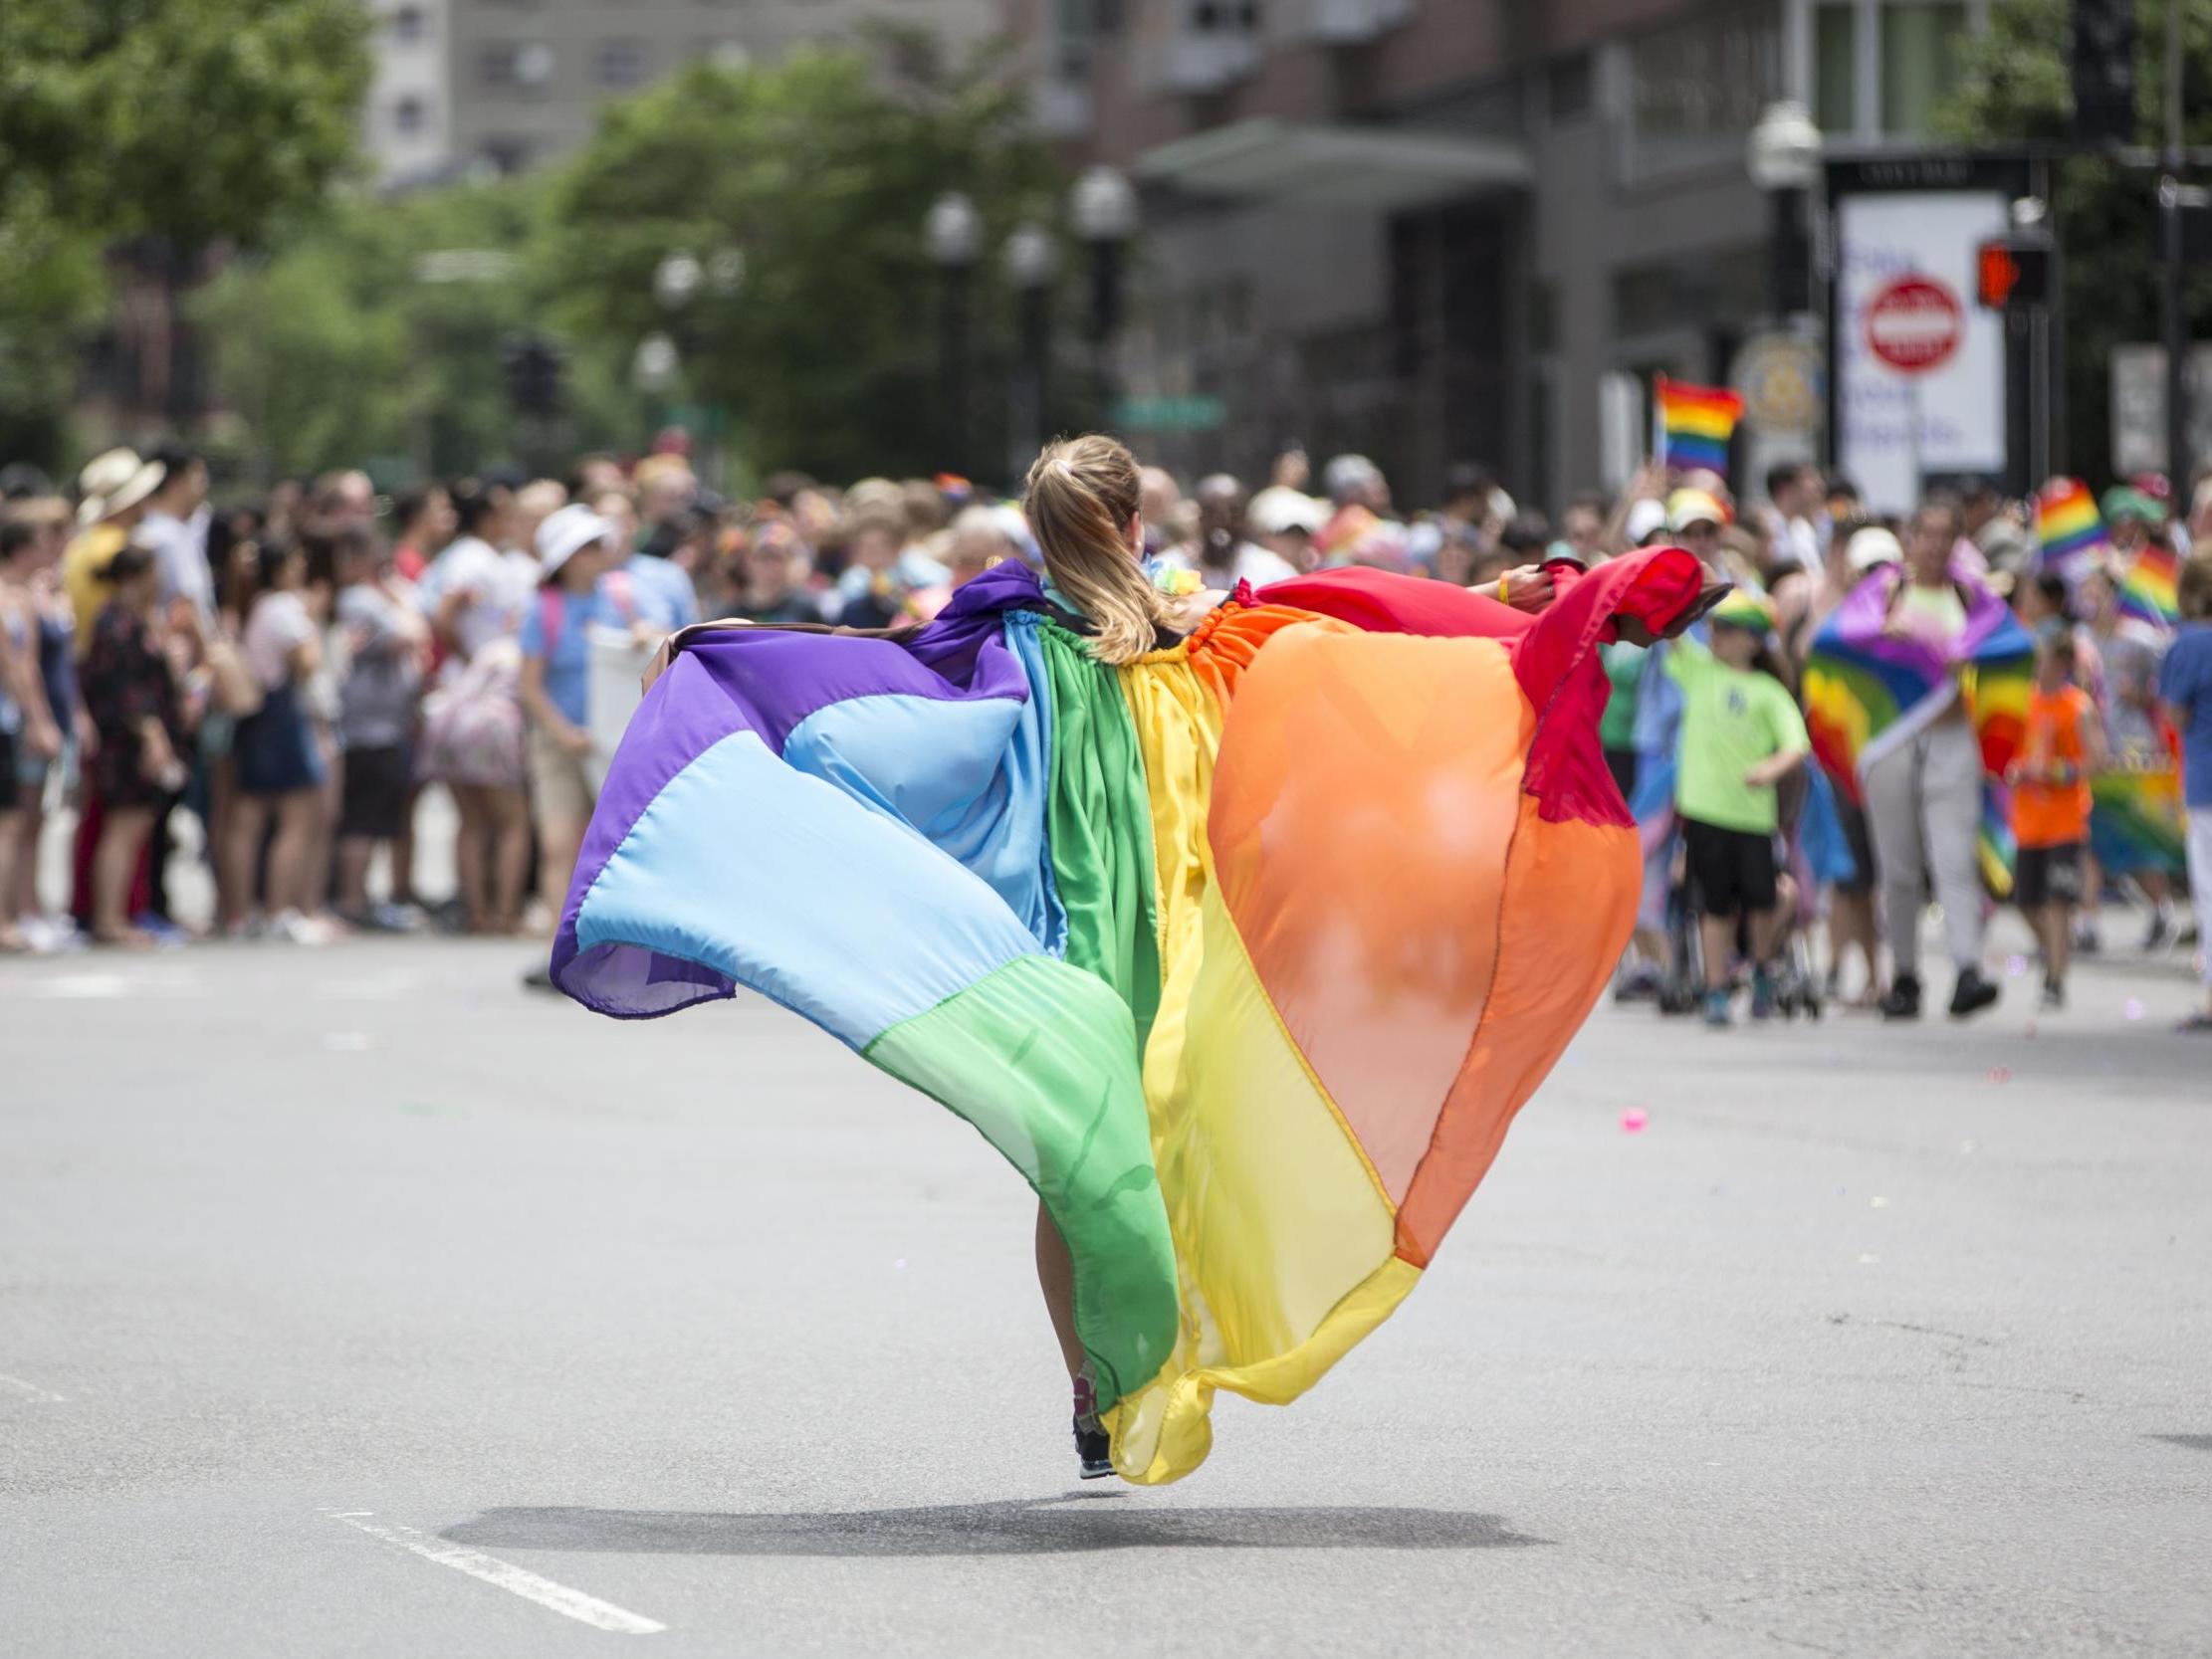 The 2018 Boston Pride Parade